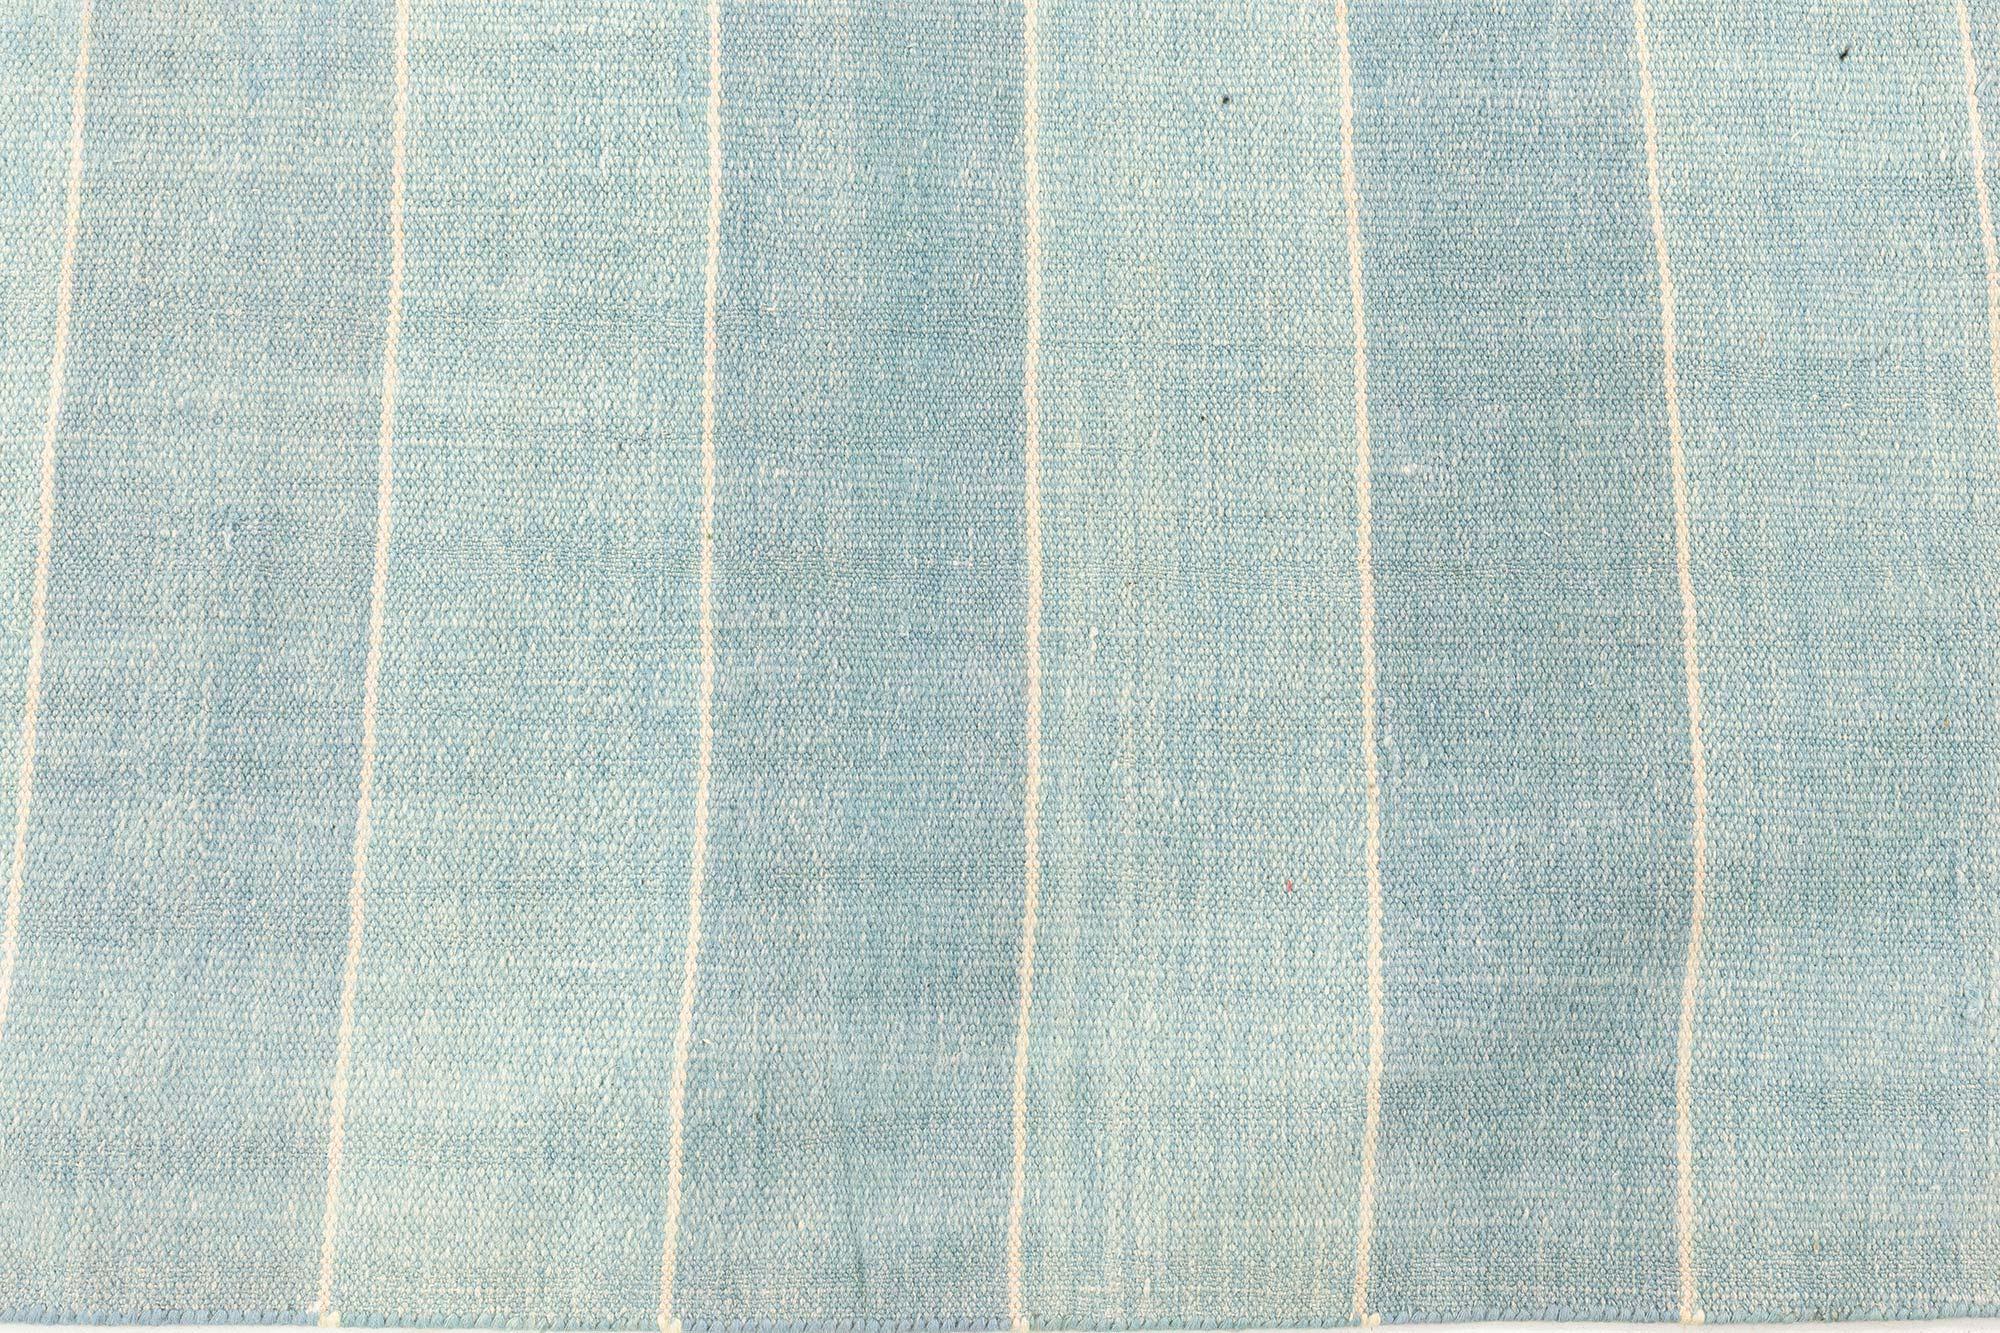 Vintage Indian Dhurrie Striped Blue Beige Purple Rug
Size: 8'2